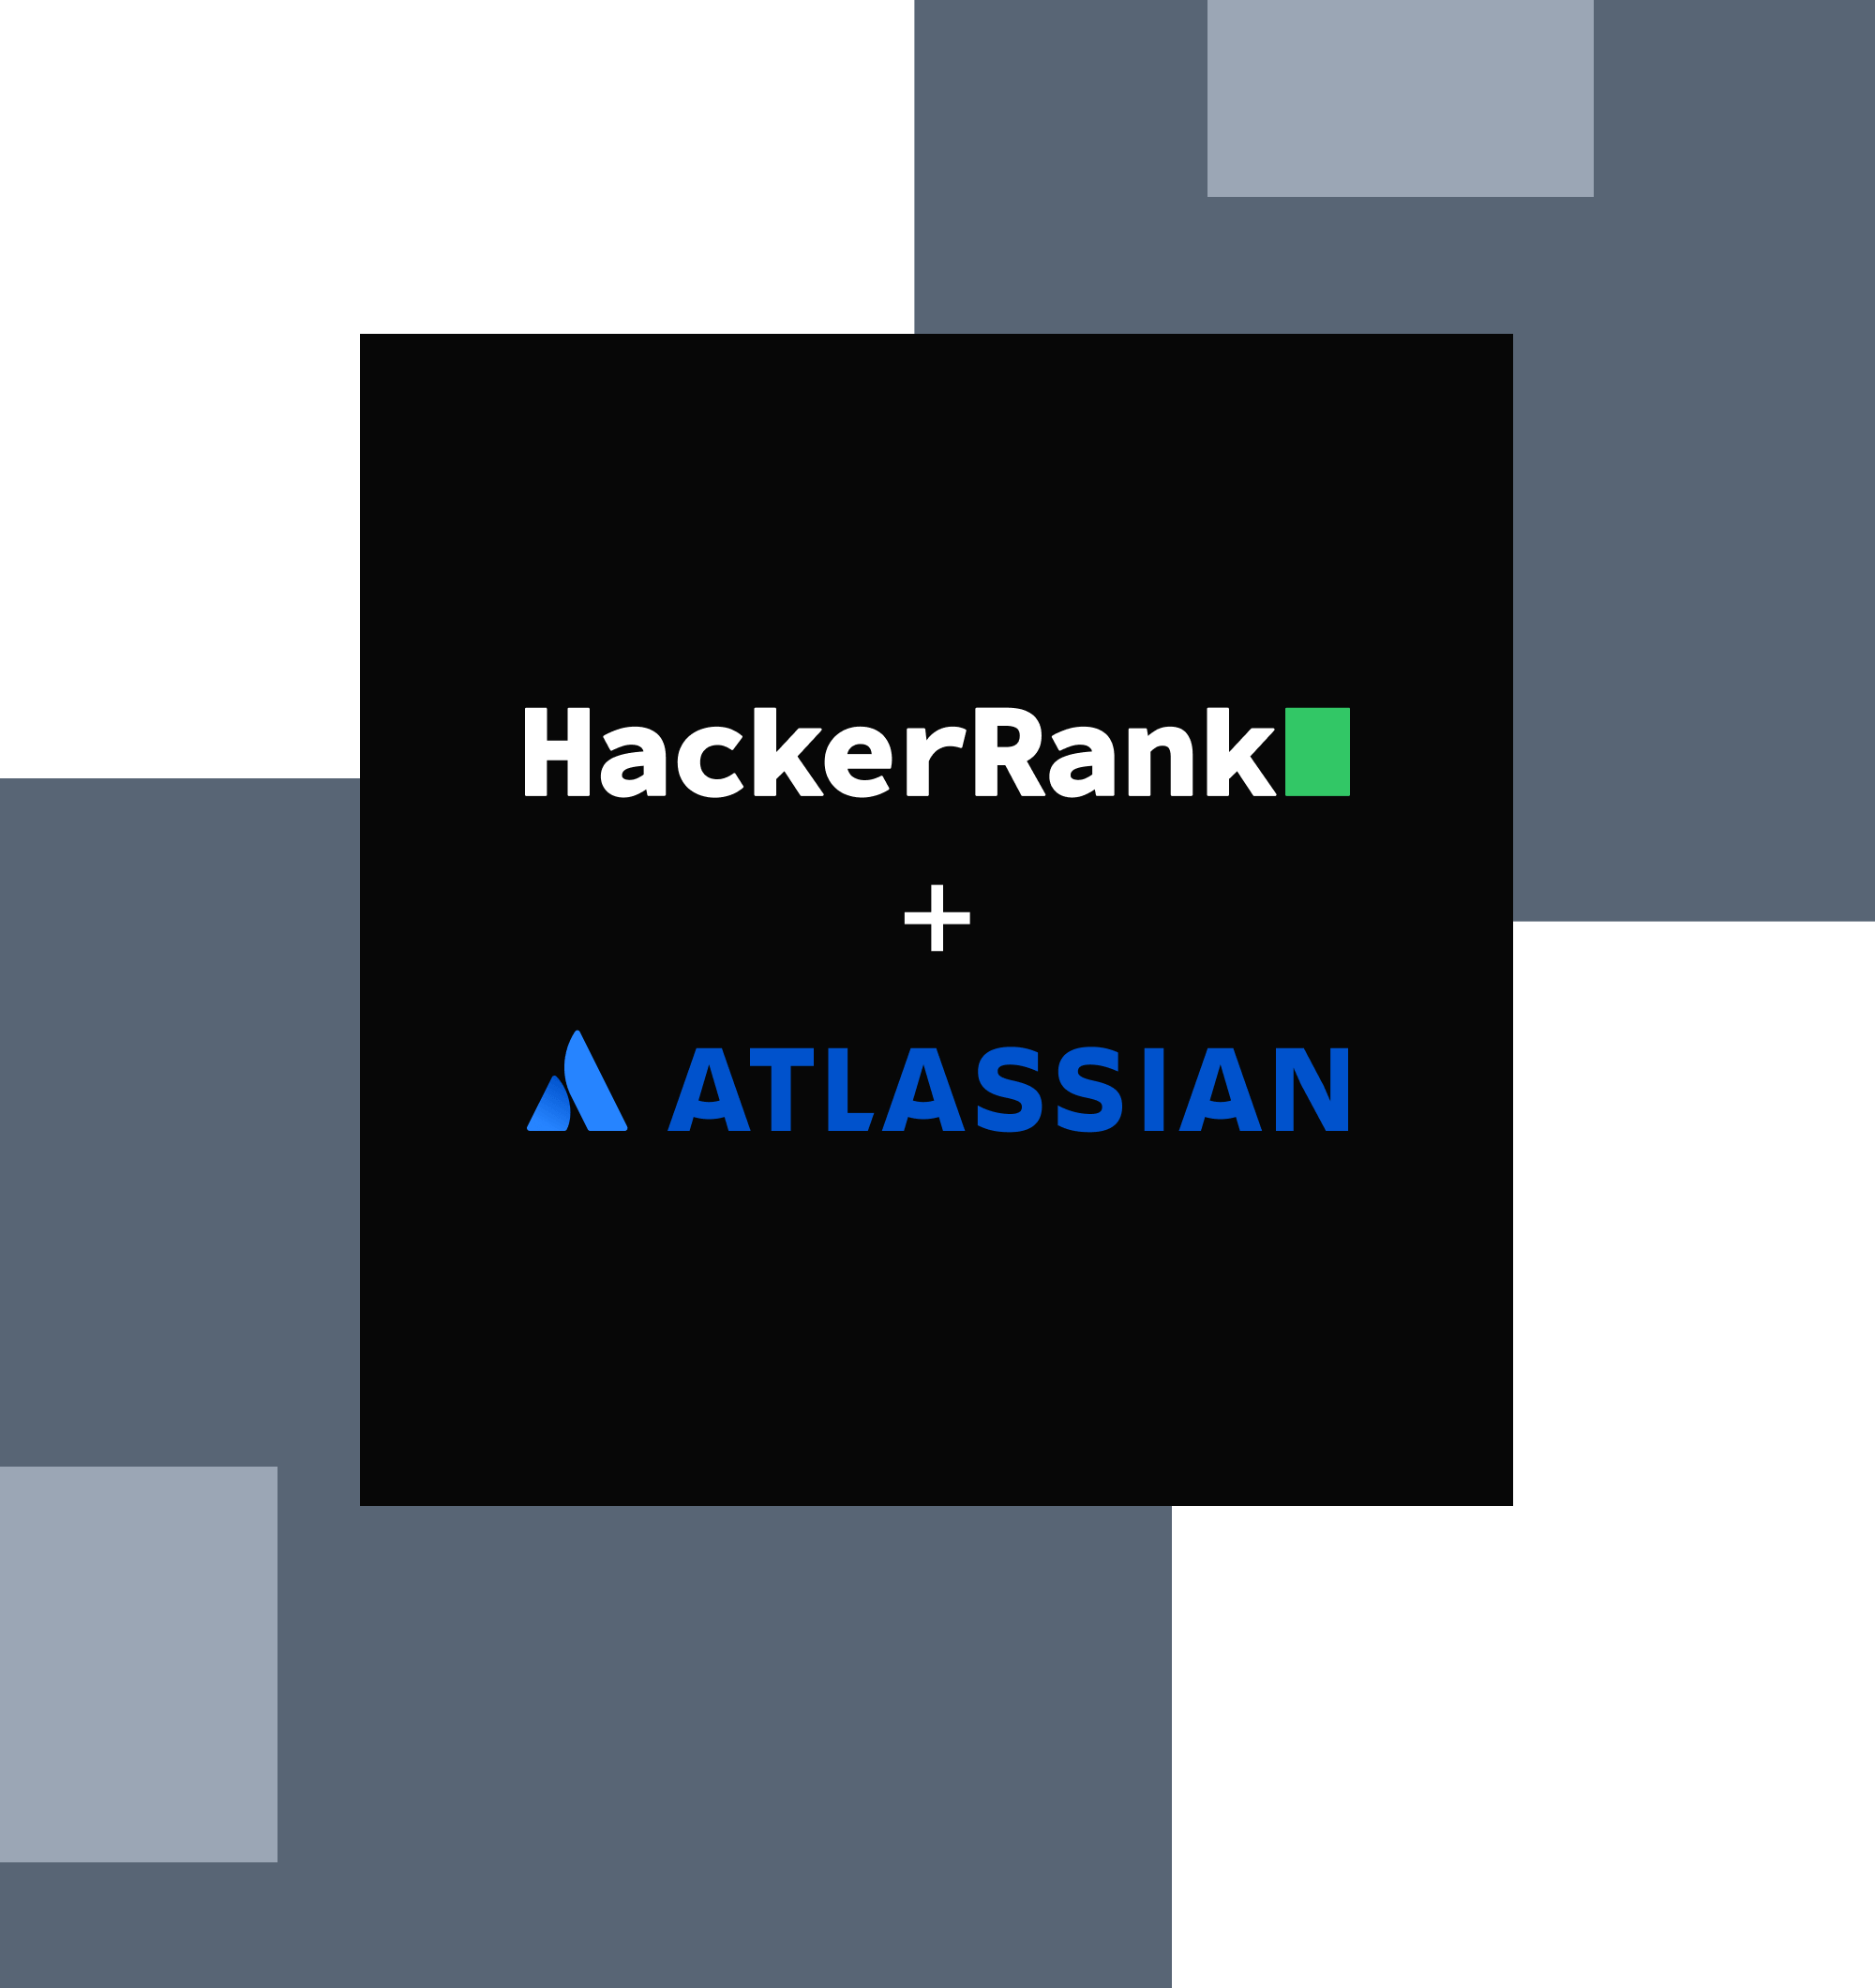 Atlassian's journey with HackerRank